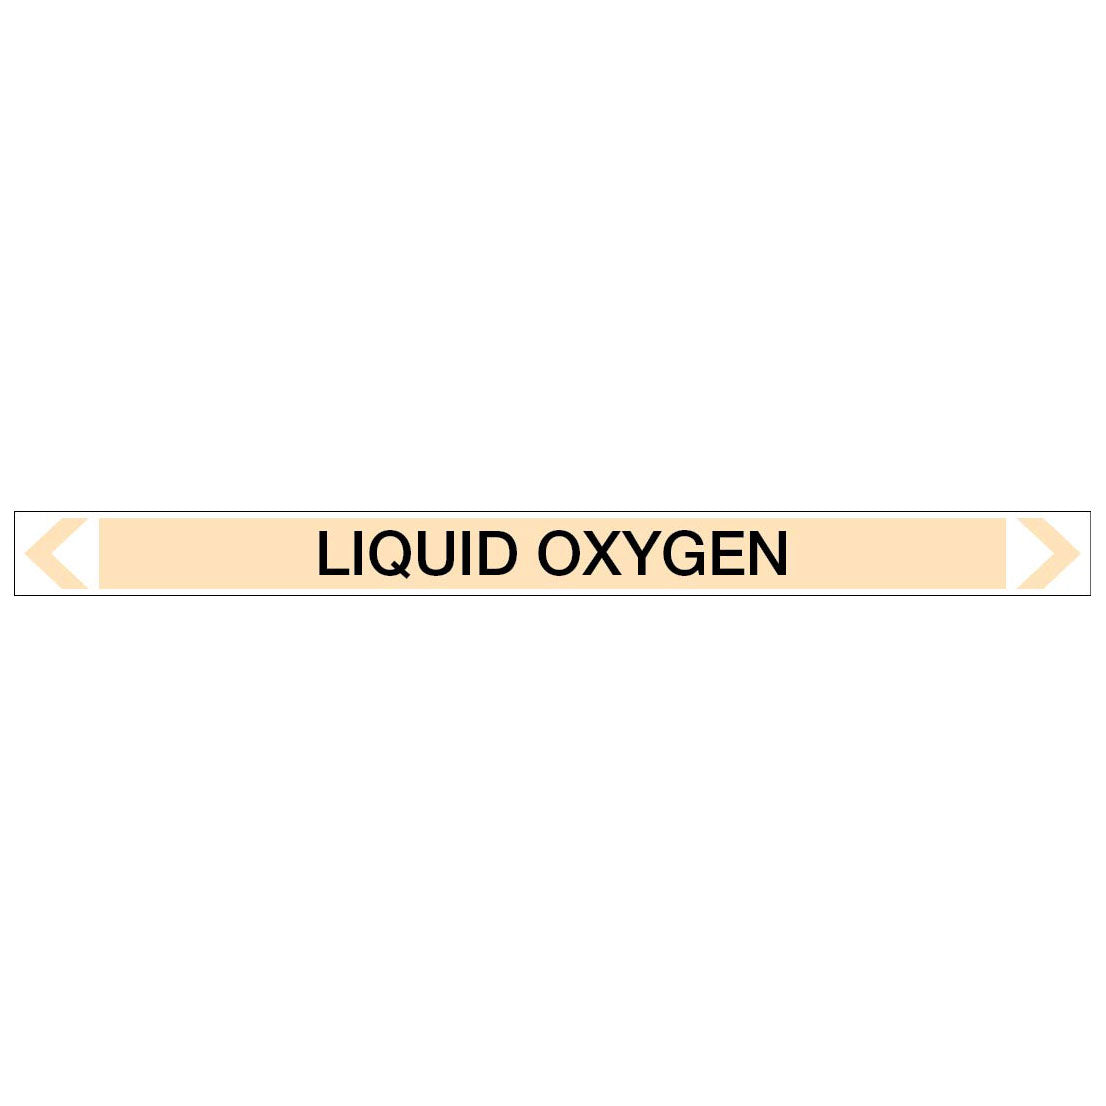 Gases - Liquid Oxygen - Pipe Marker Sticker